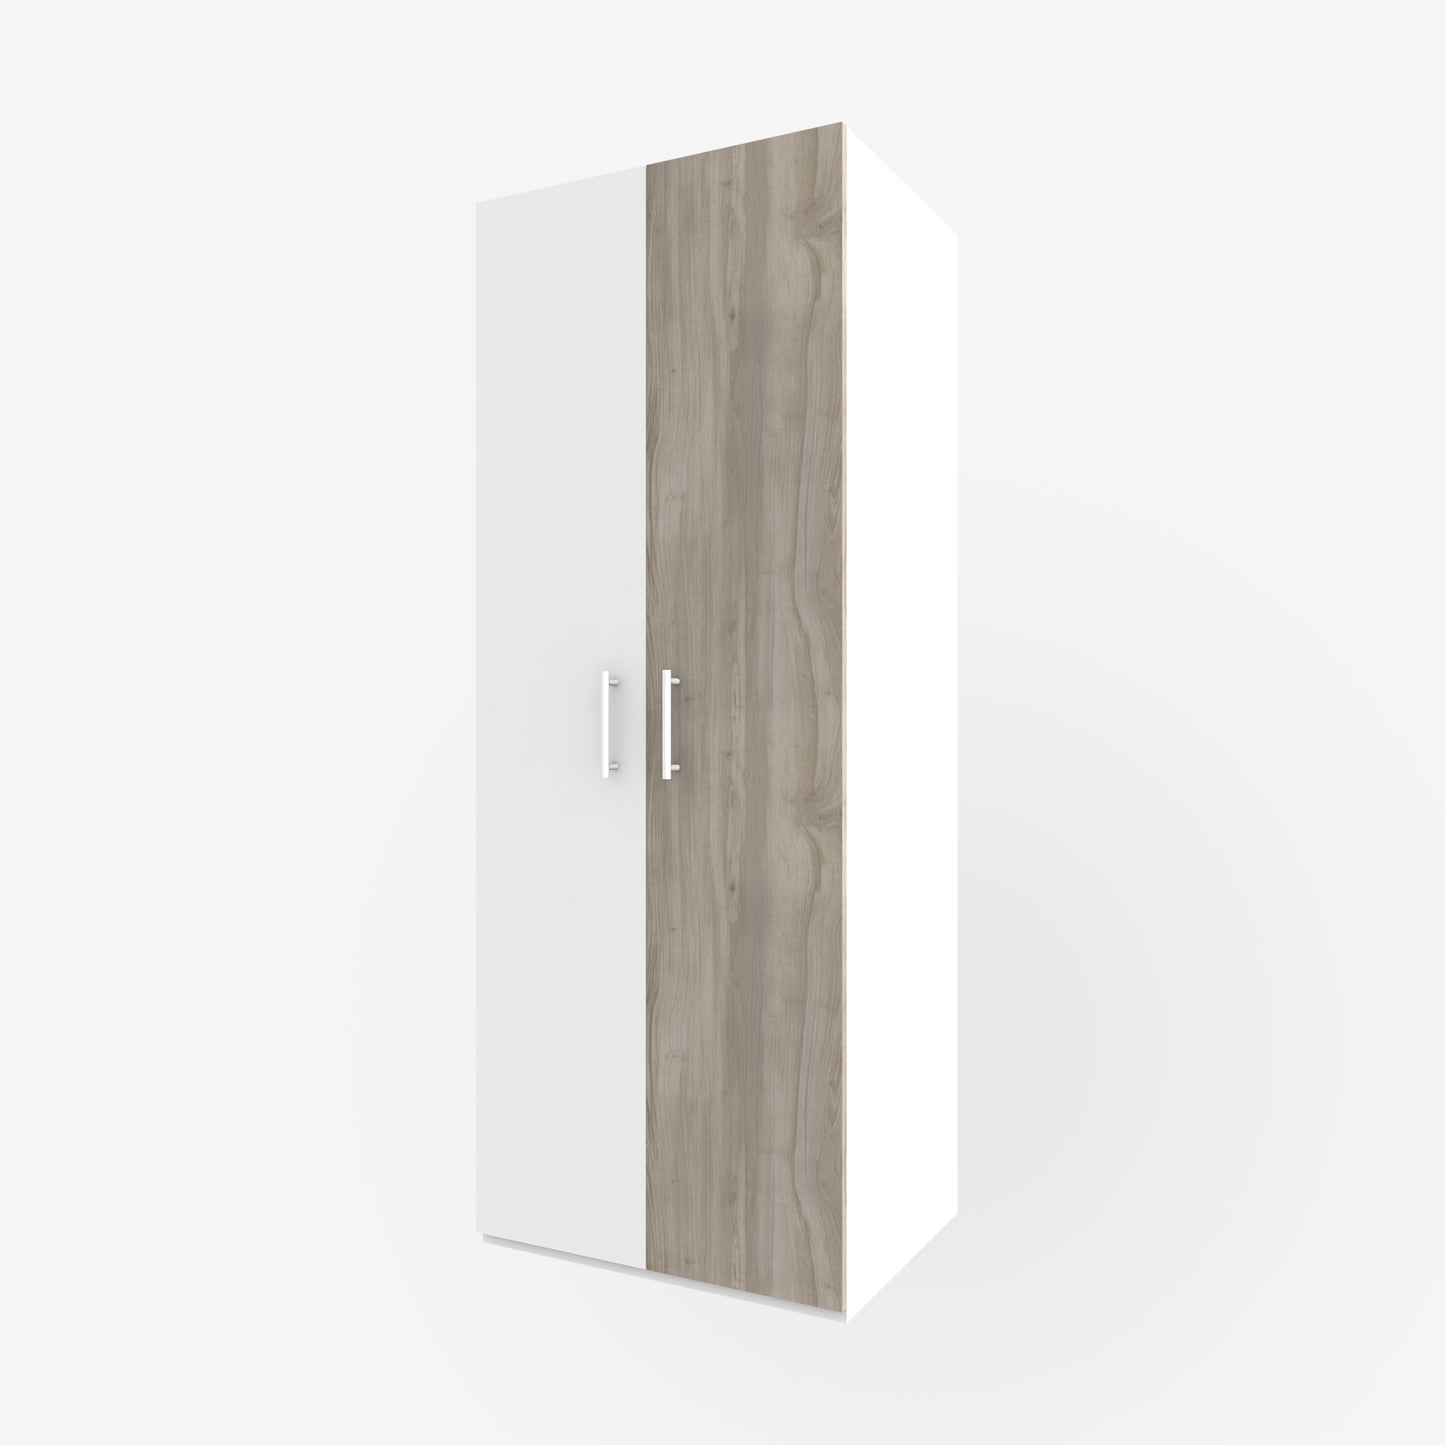 15" x 79" warm brown tone silverwood slab door for Ikea pax closet cabinet. 